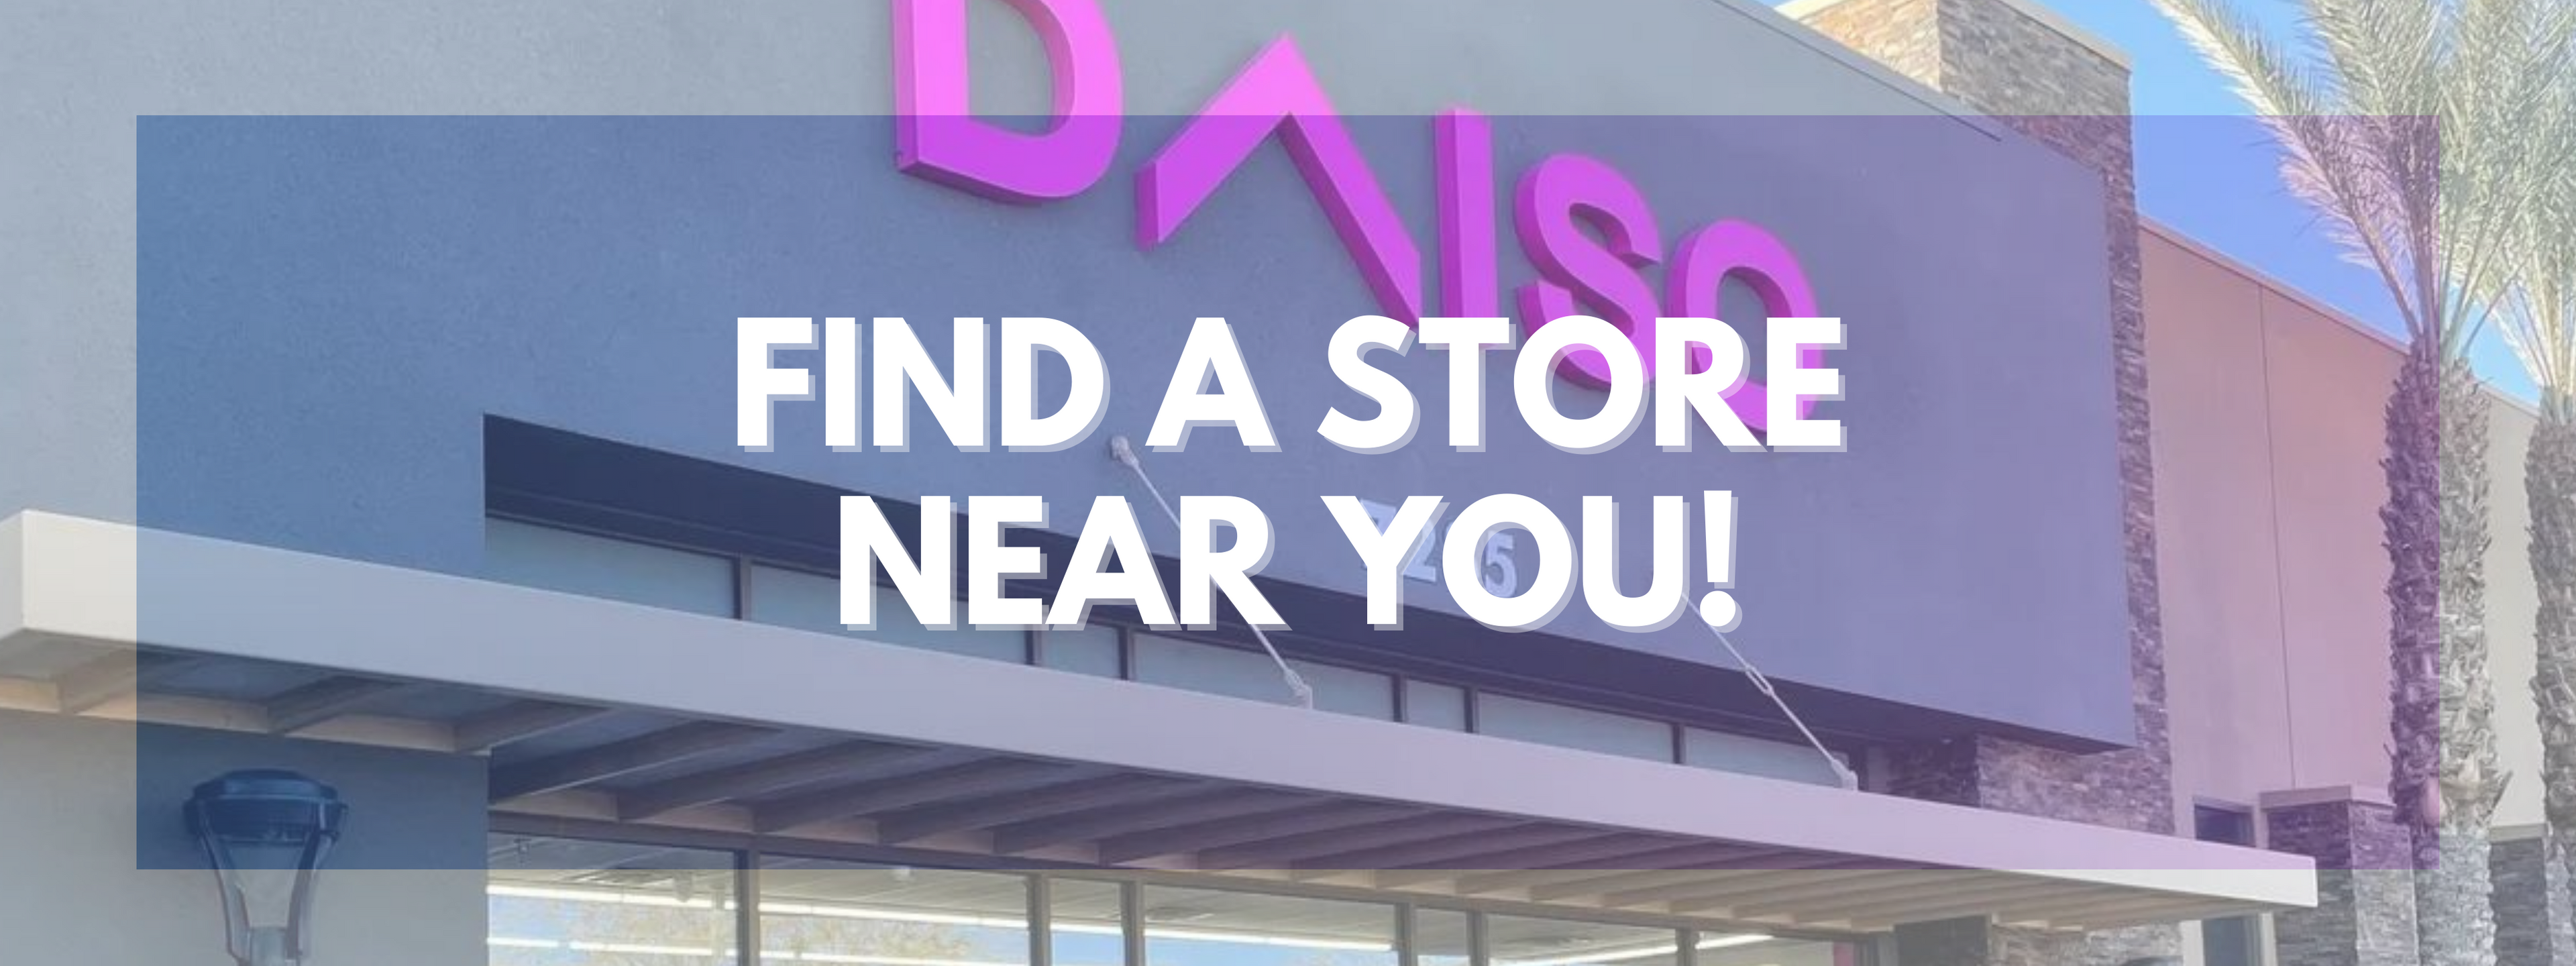 Daiso Stockton location opens at Sherwood Place